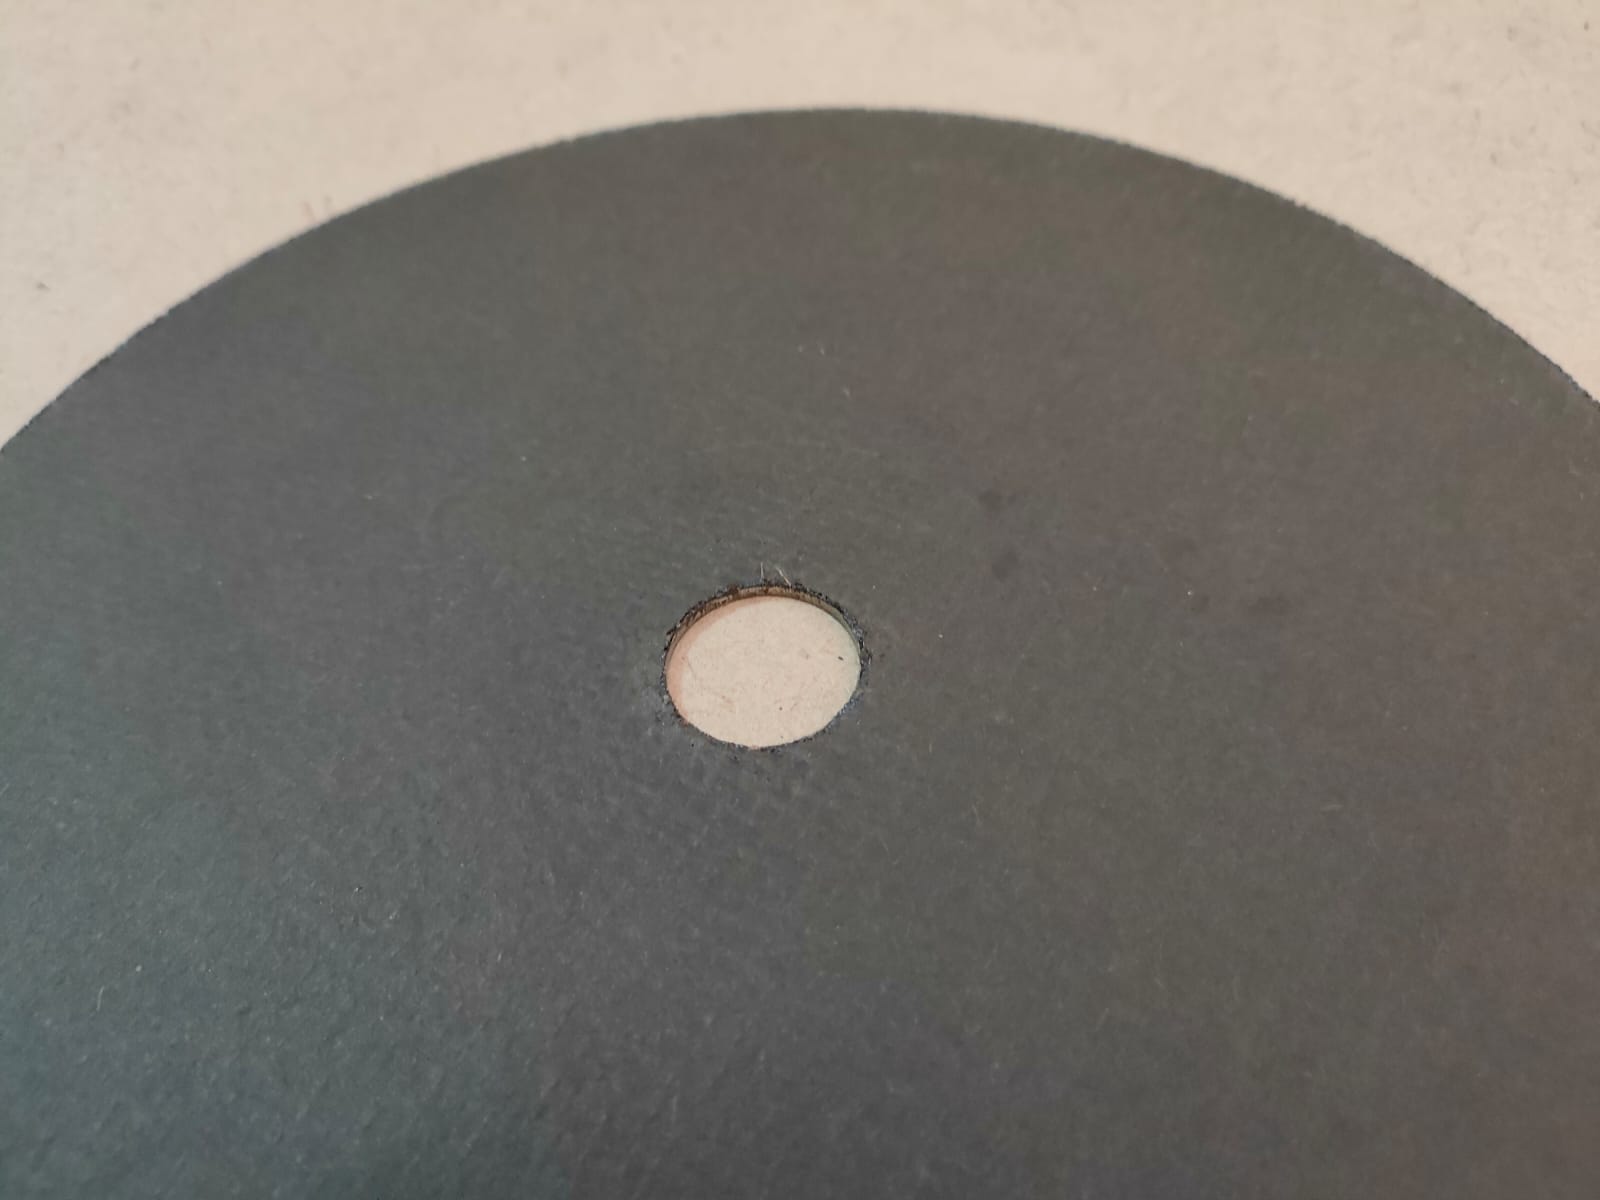 Круг (диск) отрезной по металлу для болгарки (УШМ) 230 х 2,5 х 22,23 мм METABO (1 шт)